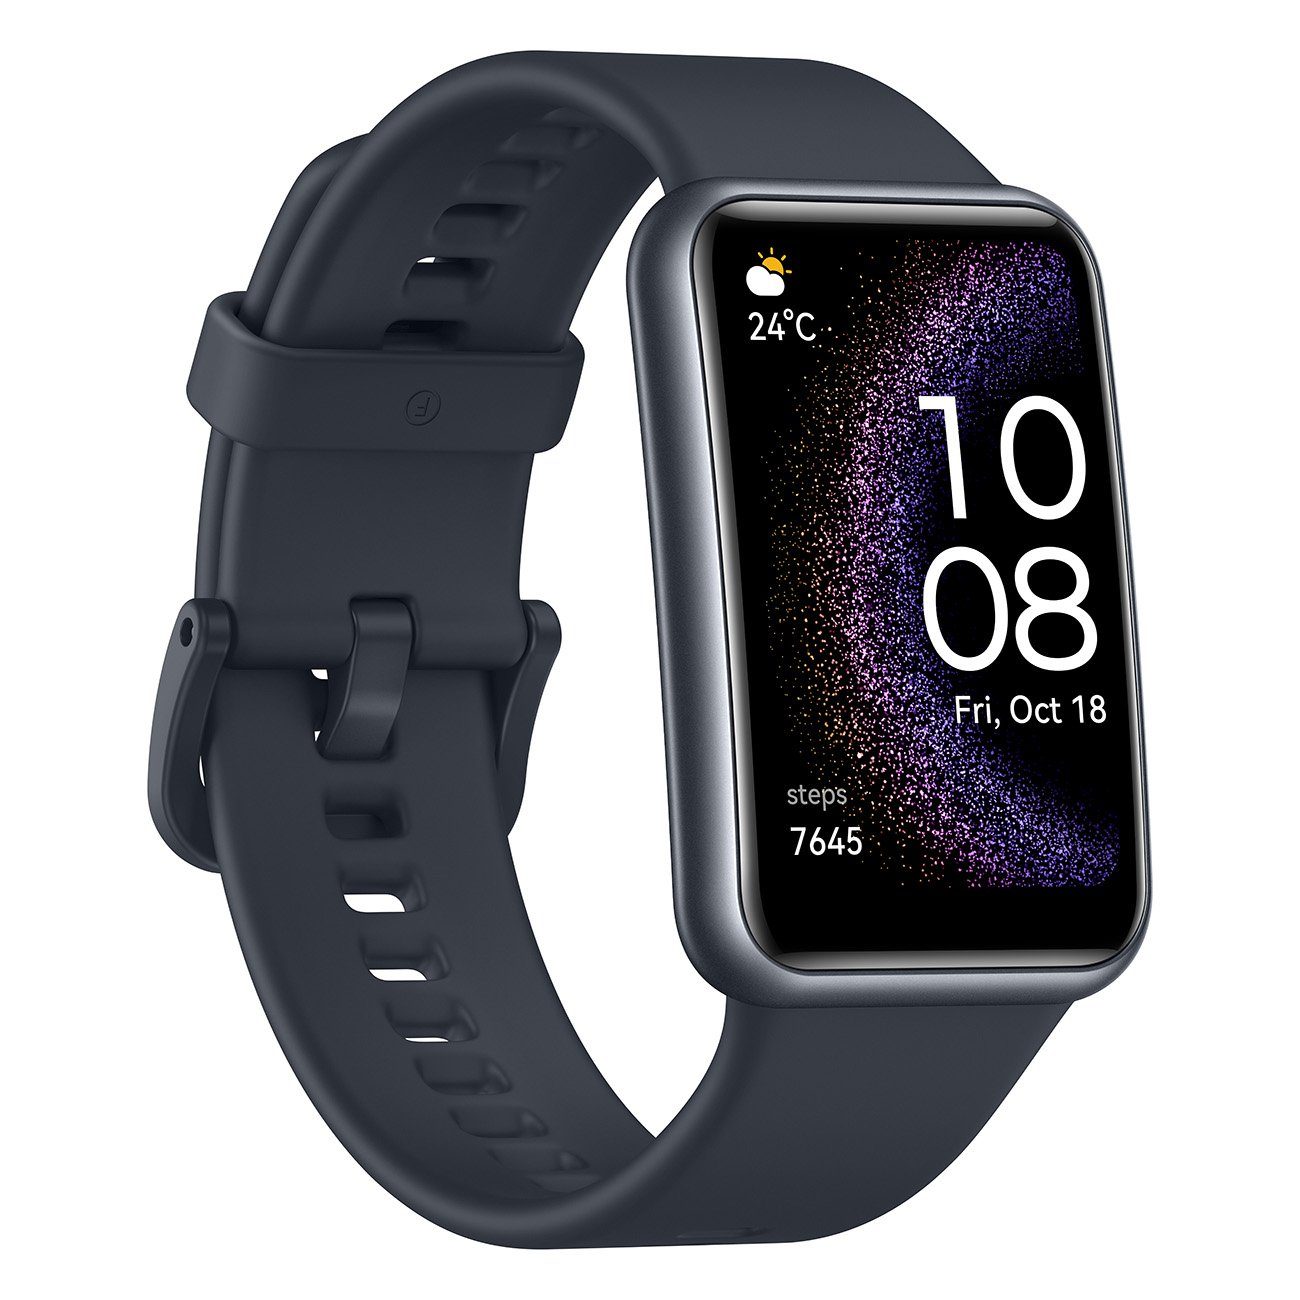 Huawei Watch schwarz SE Fit Smartwatch